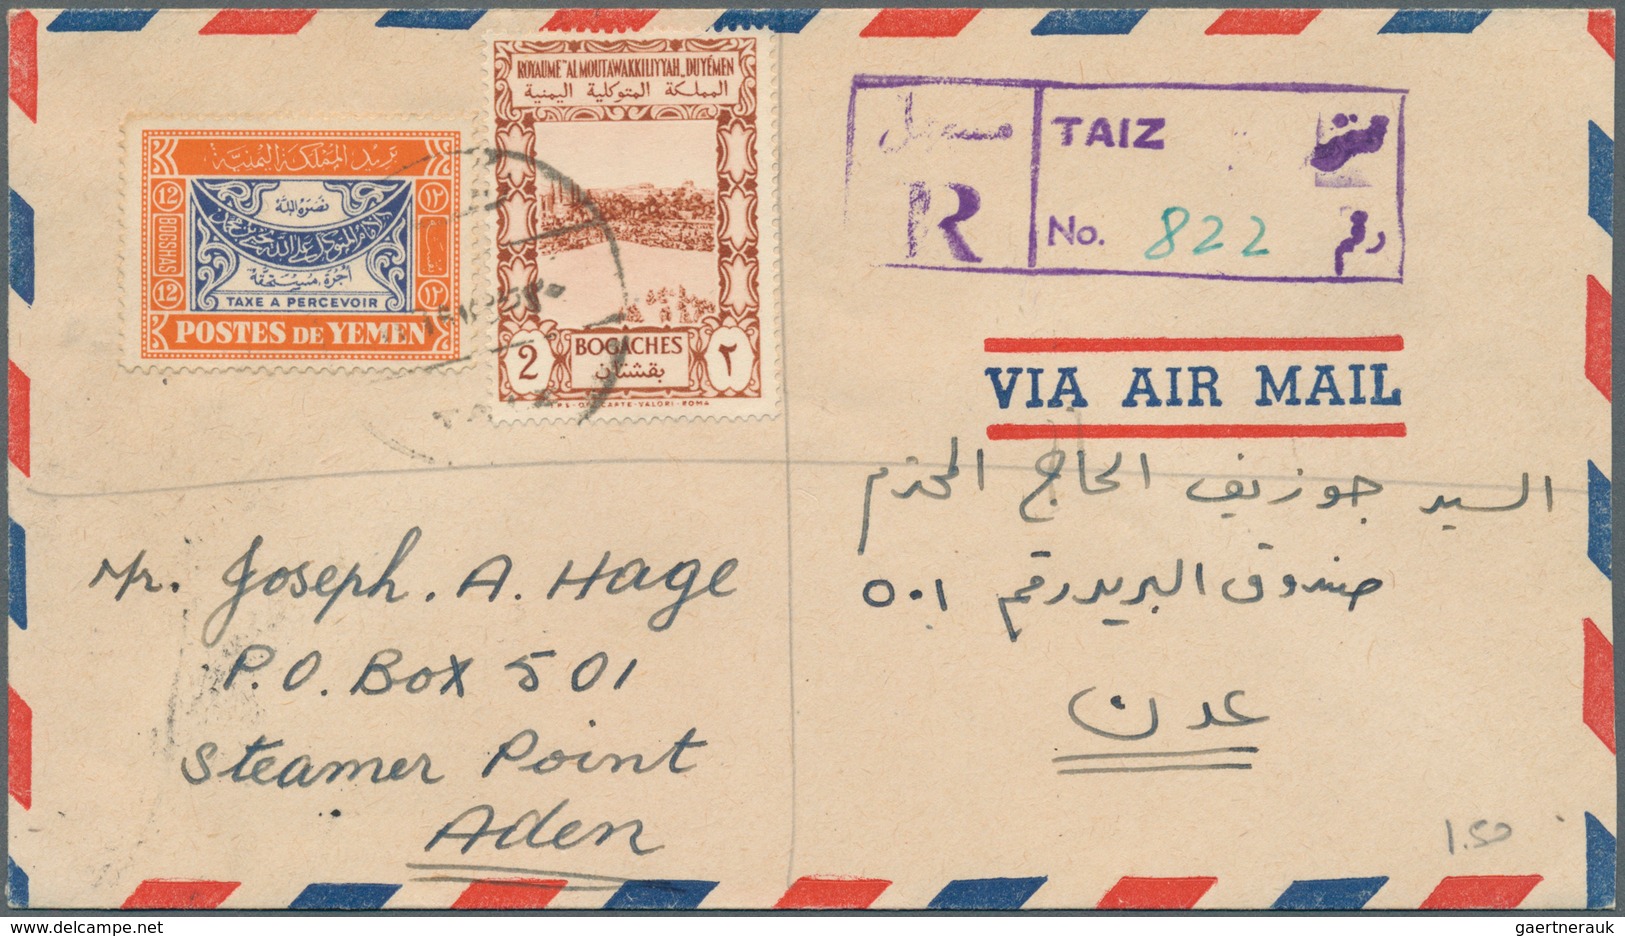 Jemen: 1953/1958, lot of 21 covers mainly to destinations abroad (Lebanon, USA, Jordan) incl. regist